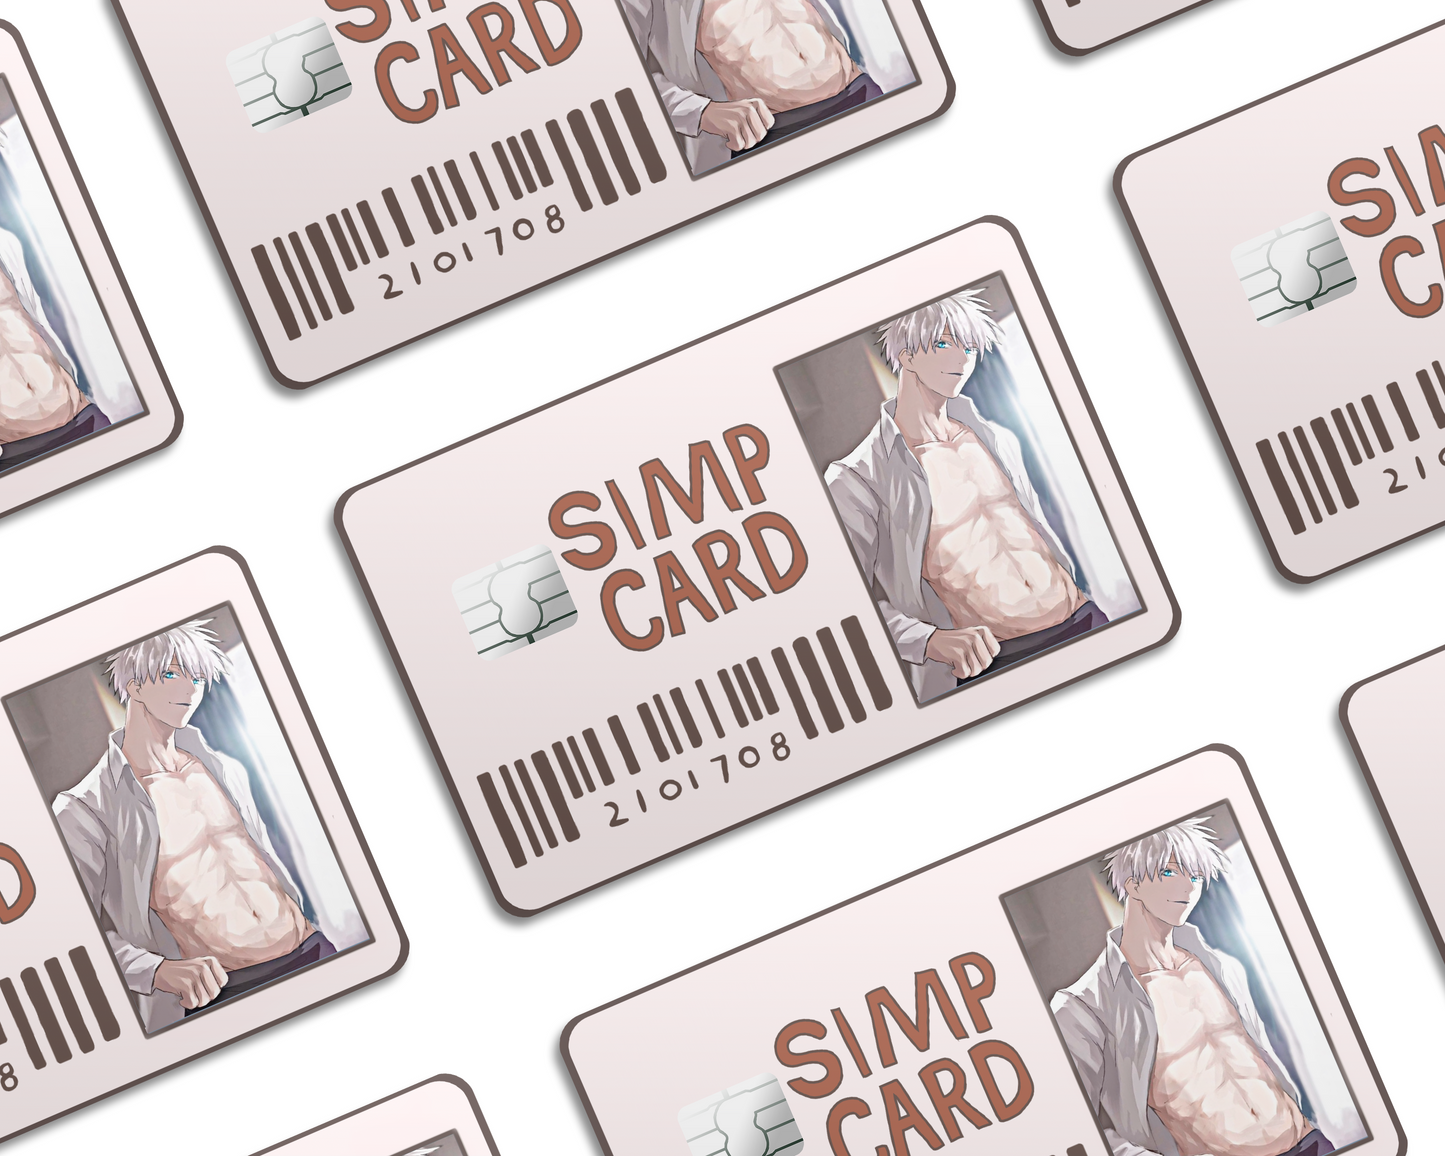 Simp Card - Send in a character! Credit Card Skin